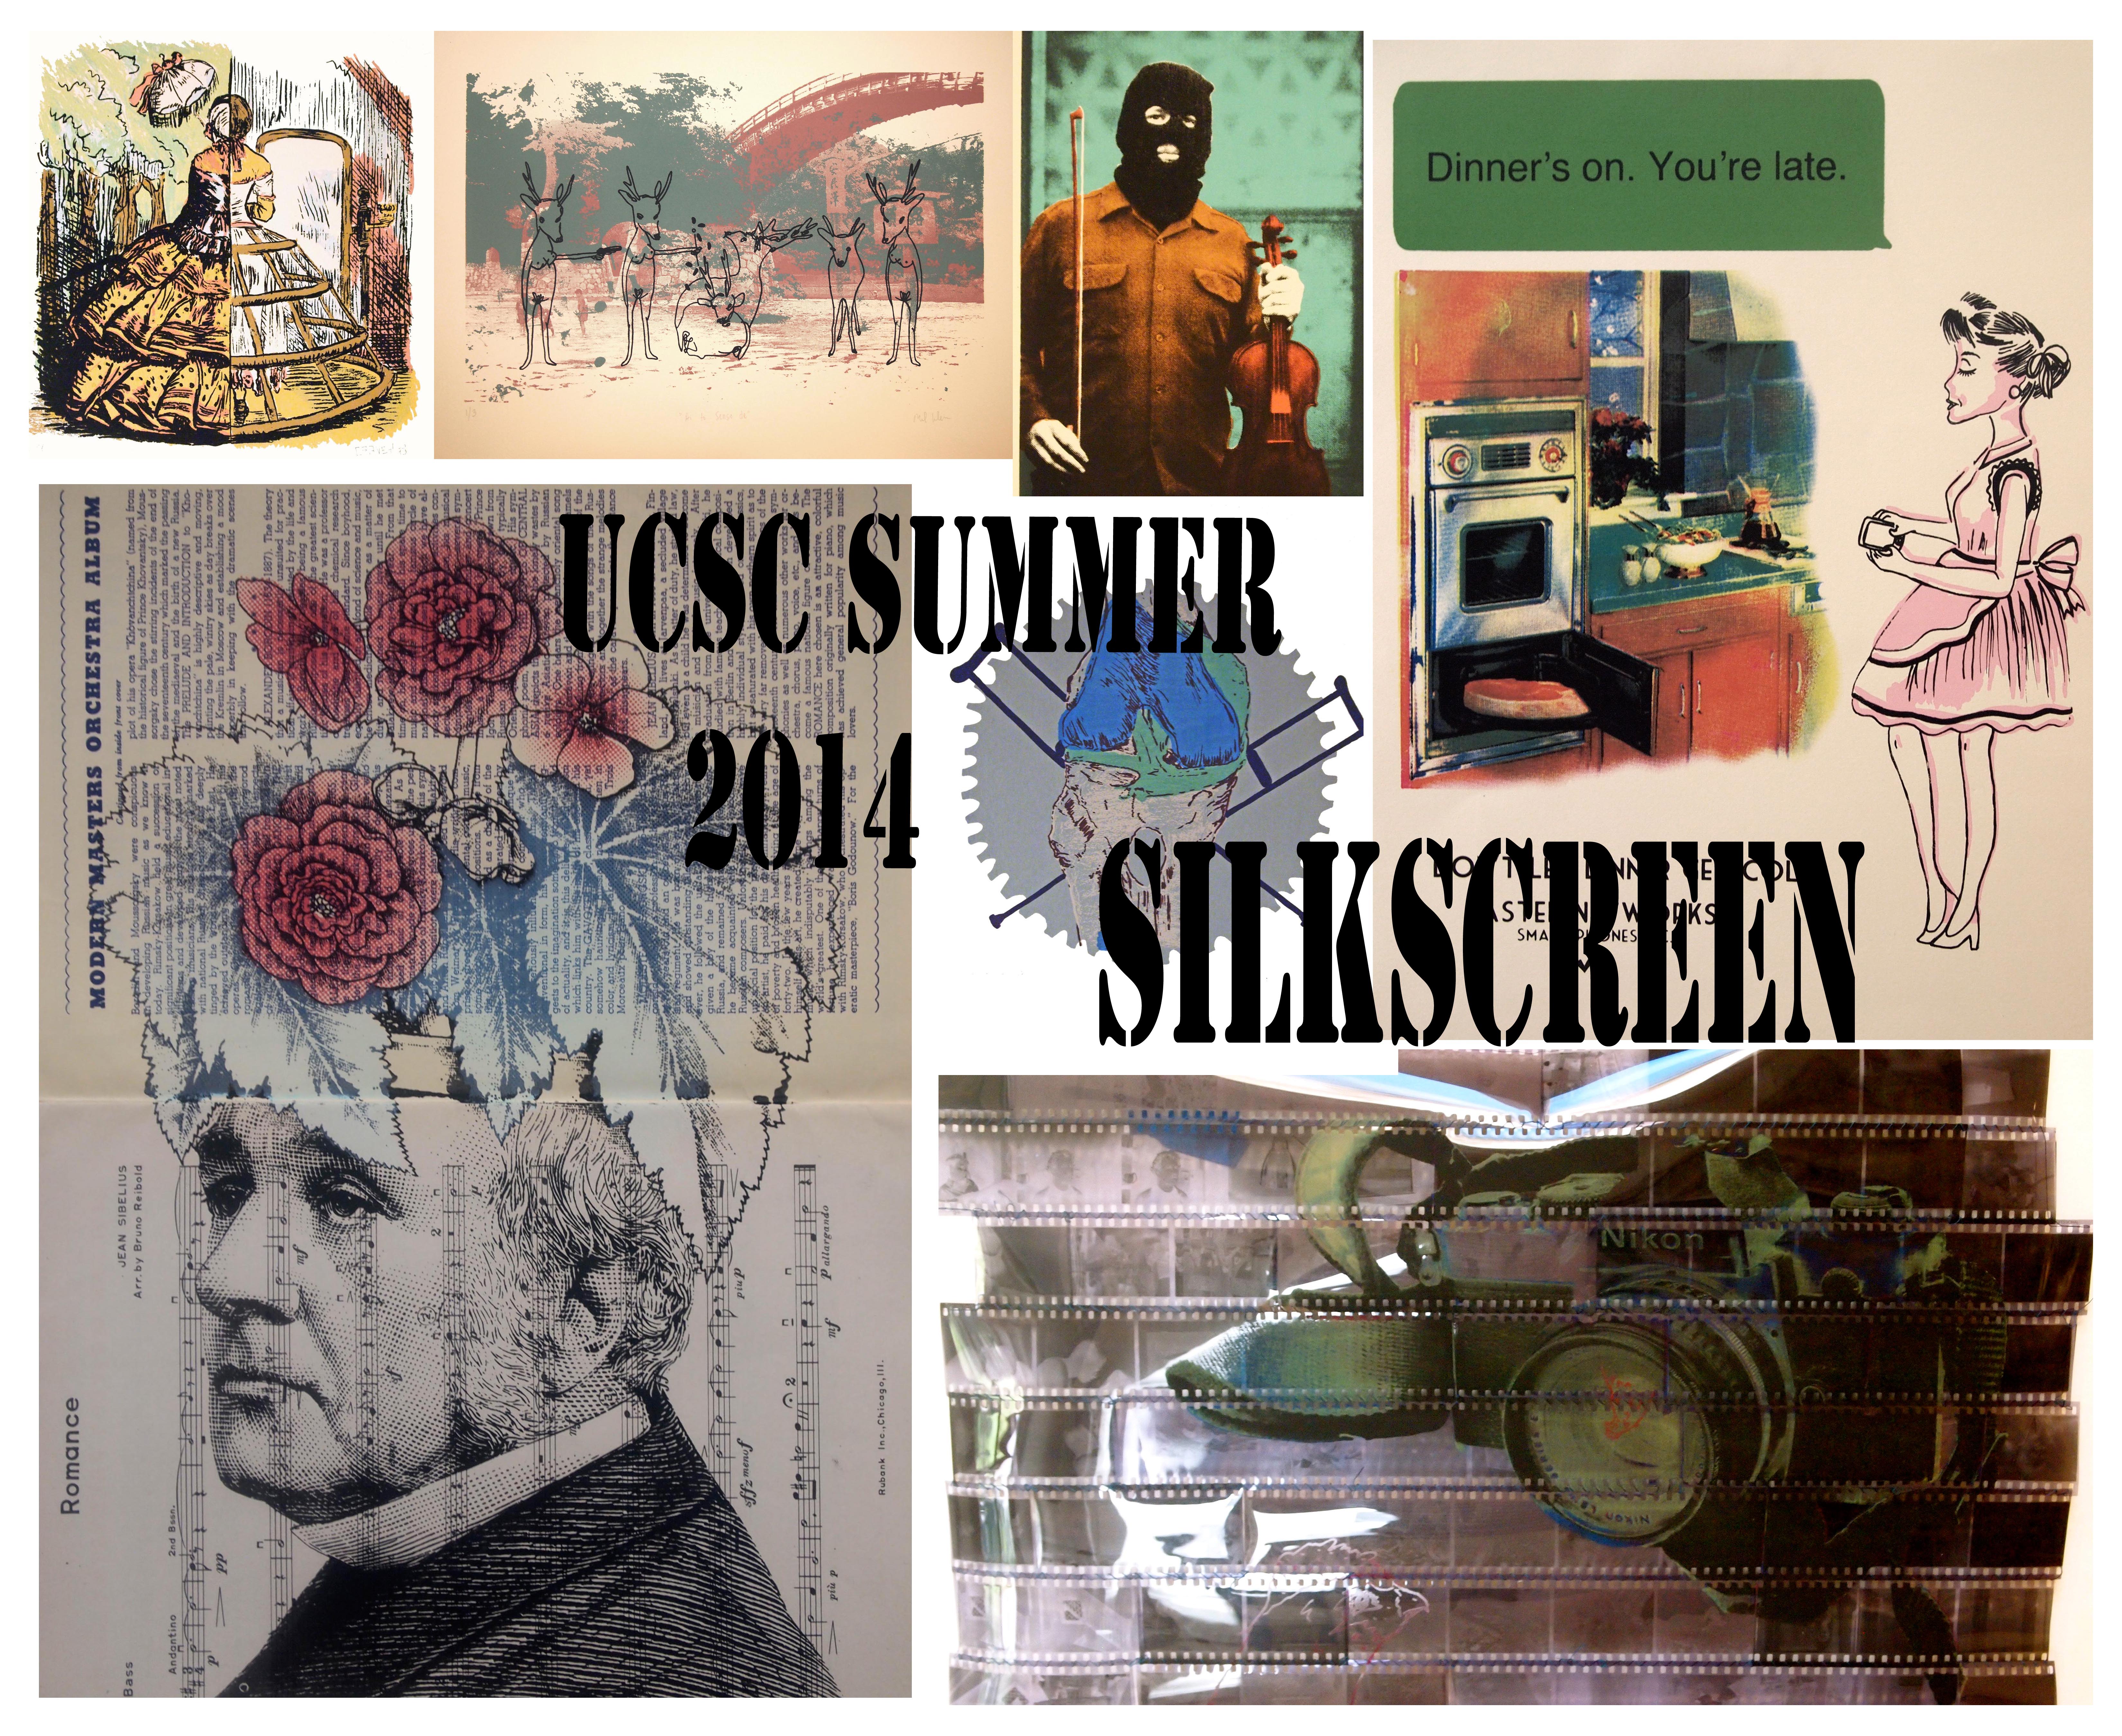 Summer Session 2014 Art Courses art.ucsc.edu Art Department, UC